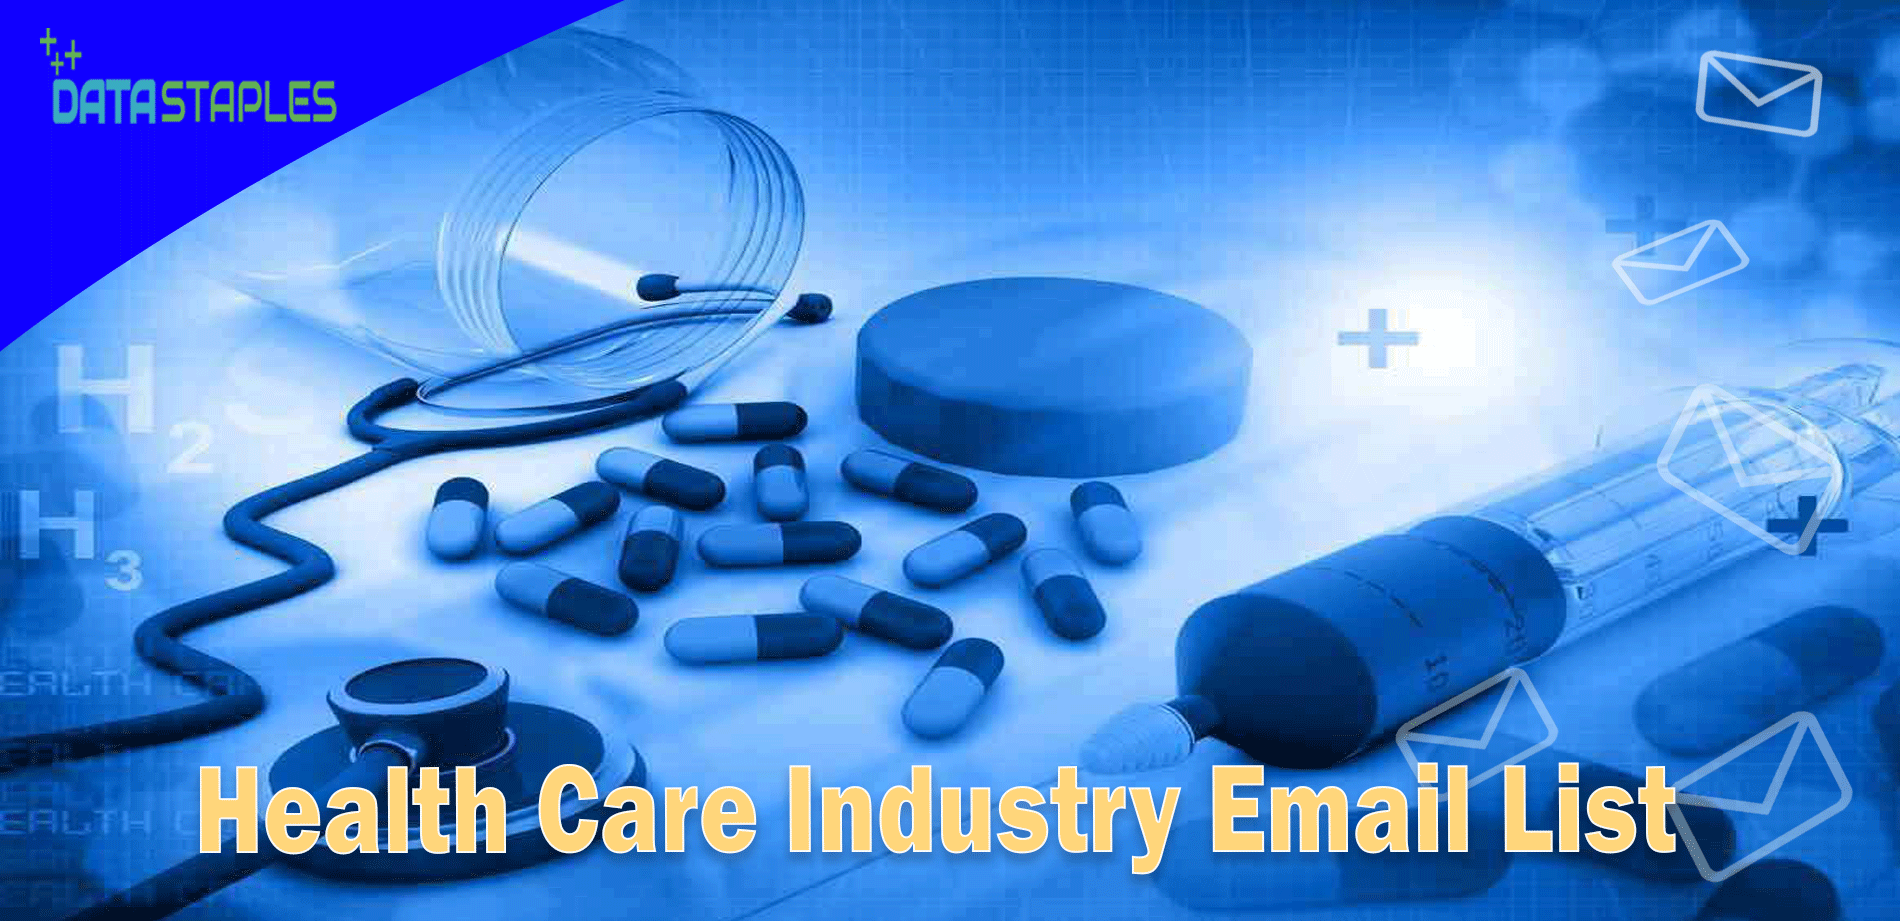 Healthcare Industry Email List | DataStaples